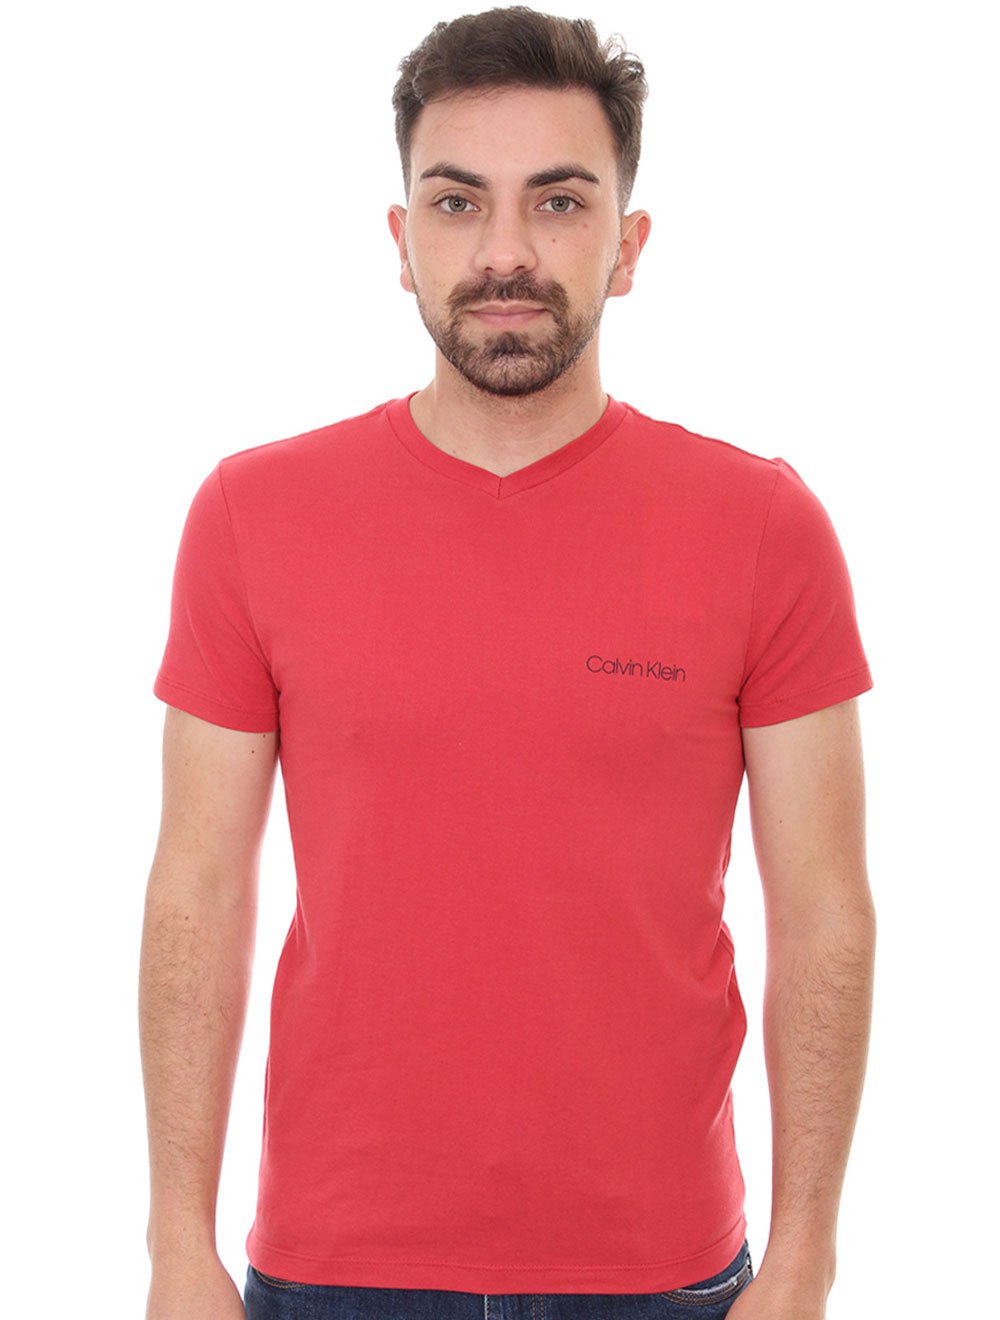 Camiseta Calvin Klein Swimwear Masculina V-Neck Slim Fit Logo Vermelha